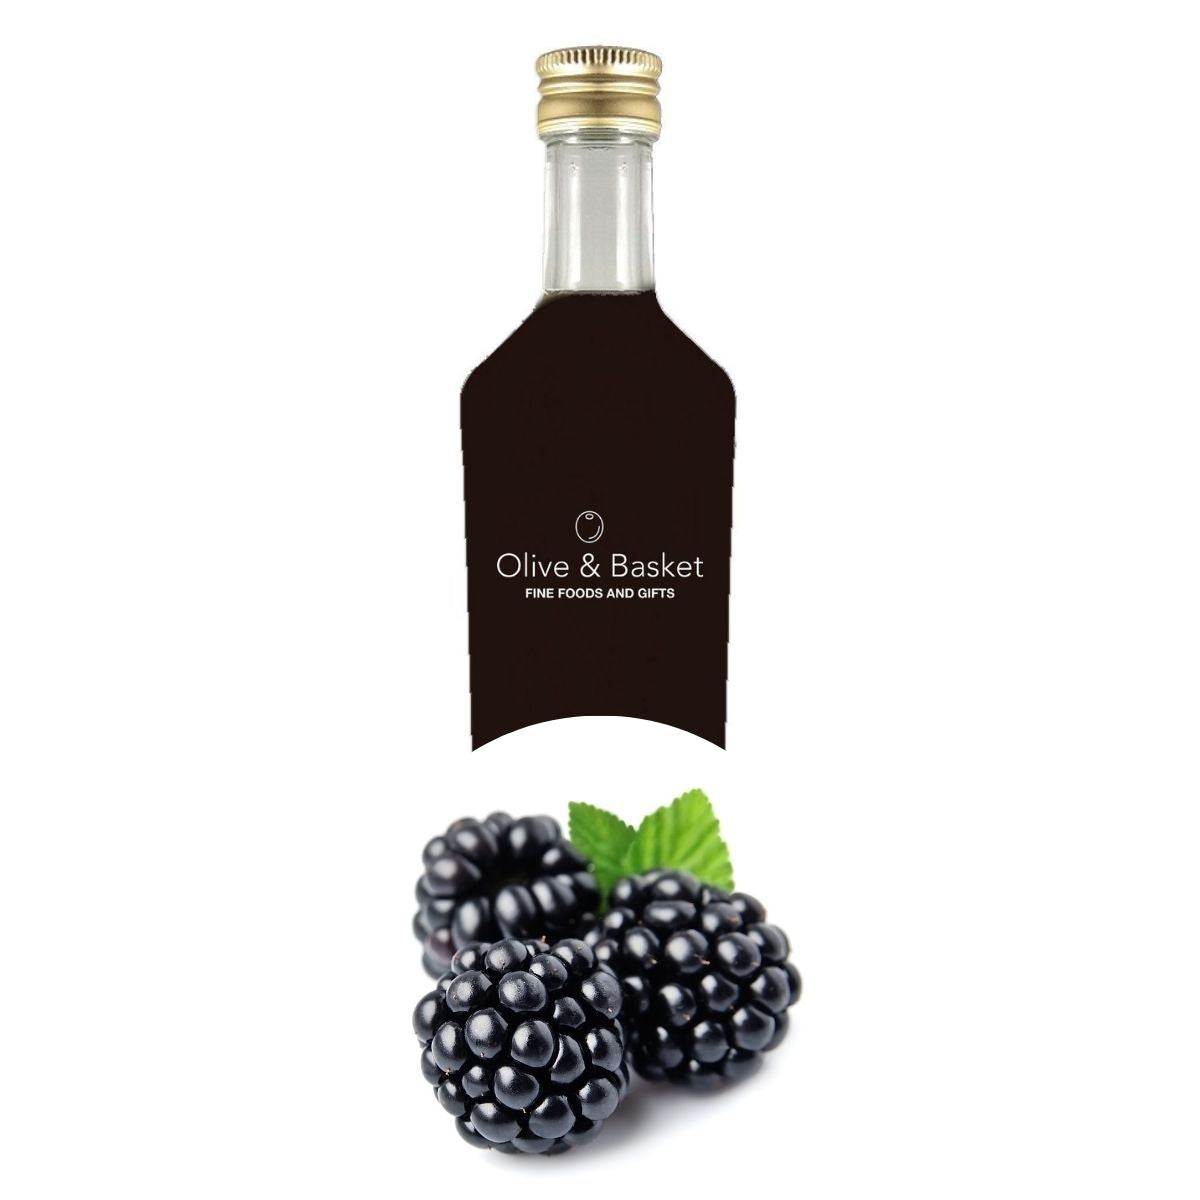 Blackberry Dark Balsamic Vinegar- Perfect for a spinach salad